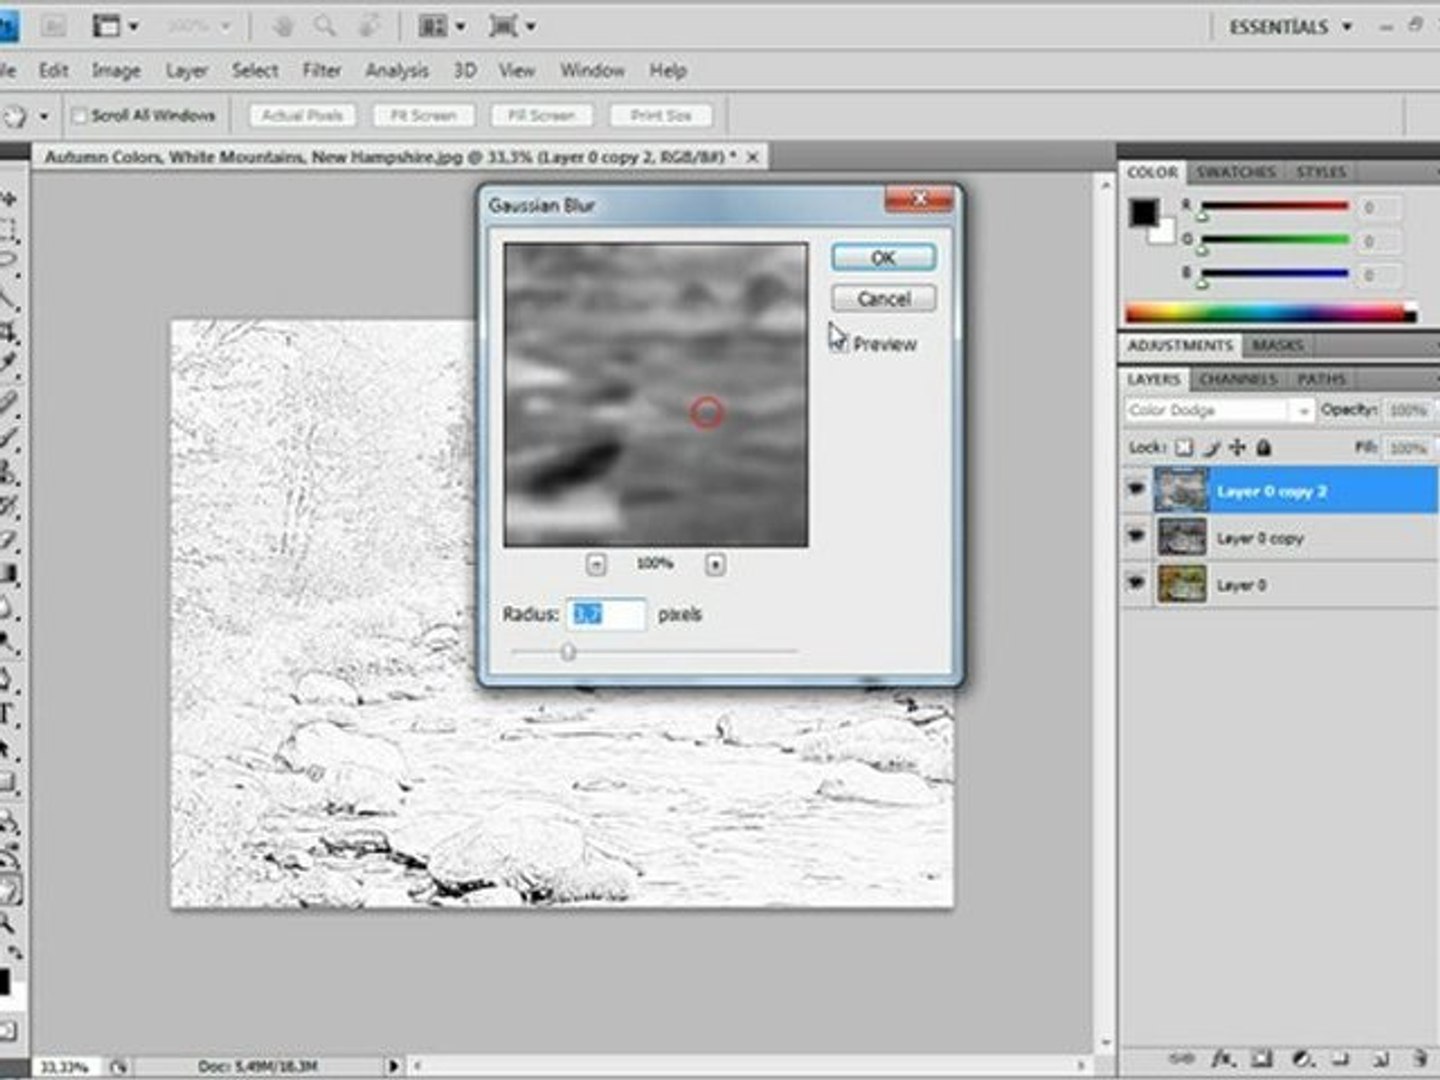 Adobe Photoshop'da Resimlere Yağlı Boya Efekti Vermek - Dailymotion Video